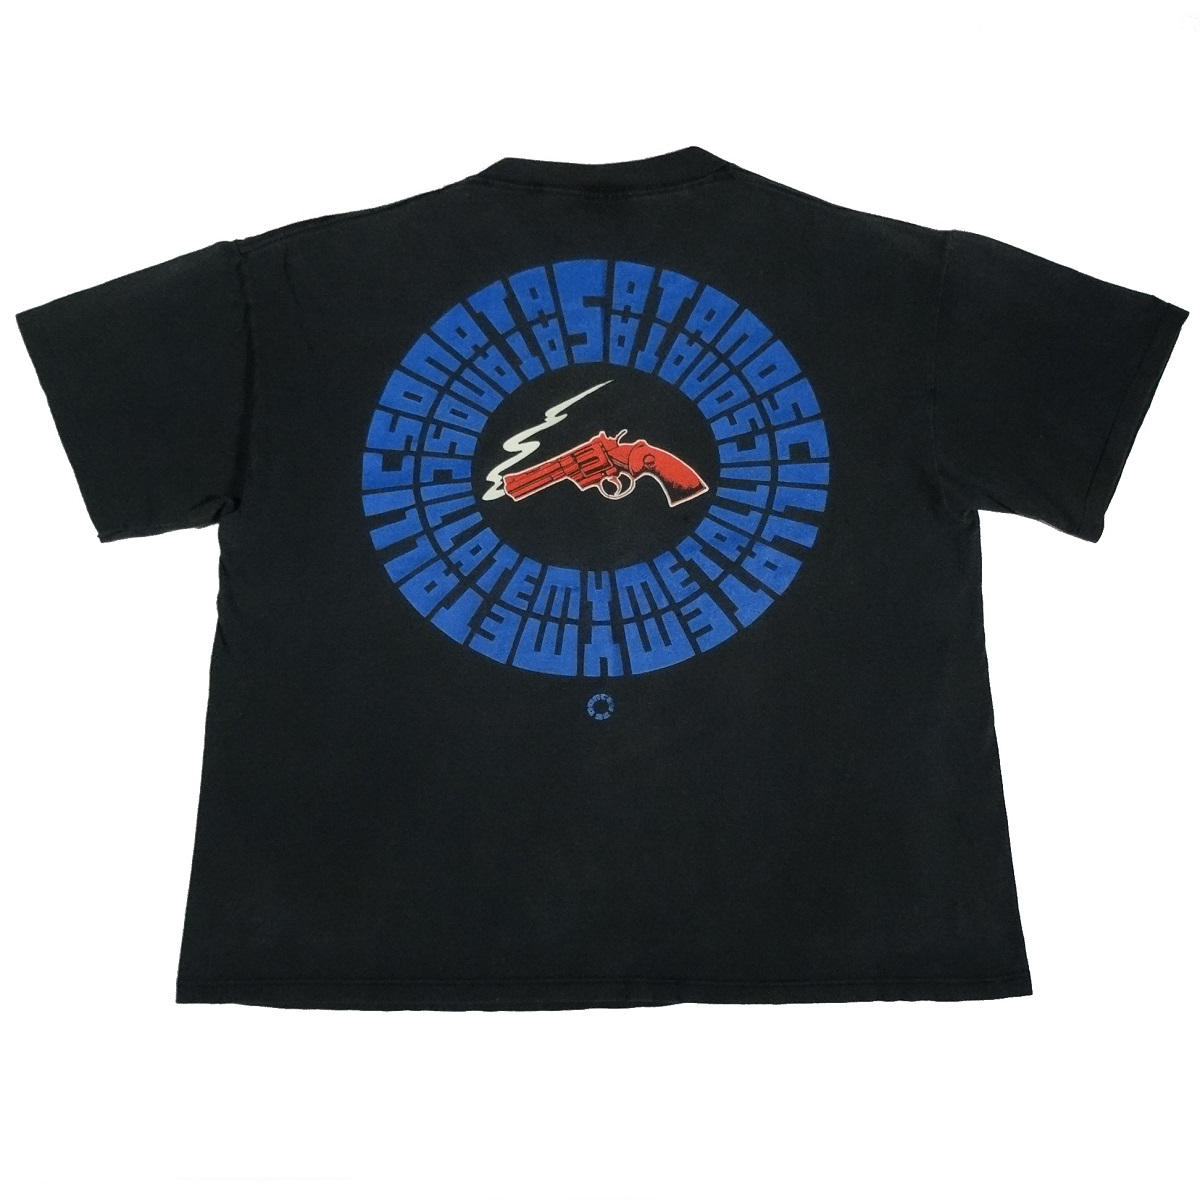 Soundgarden Badmotorfinger 1992 T-Shirt Vintage 90's